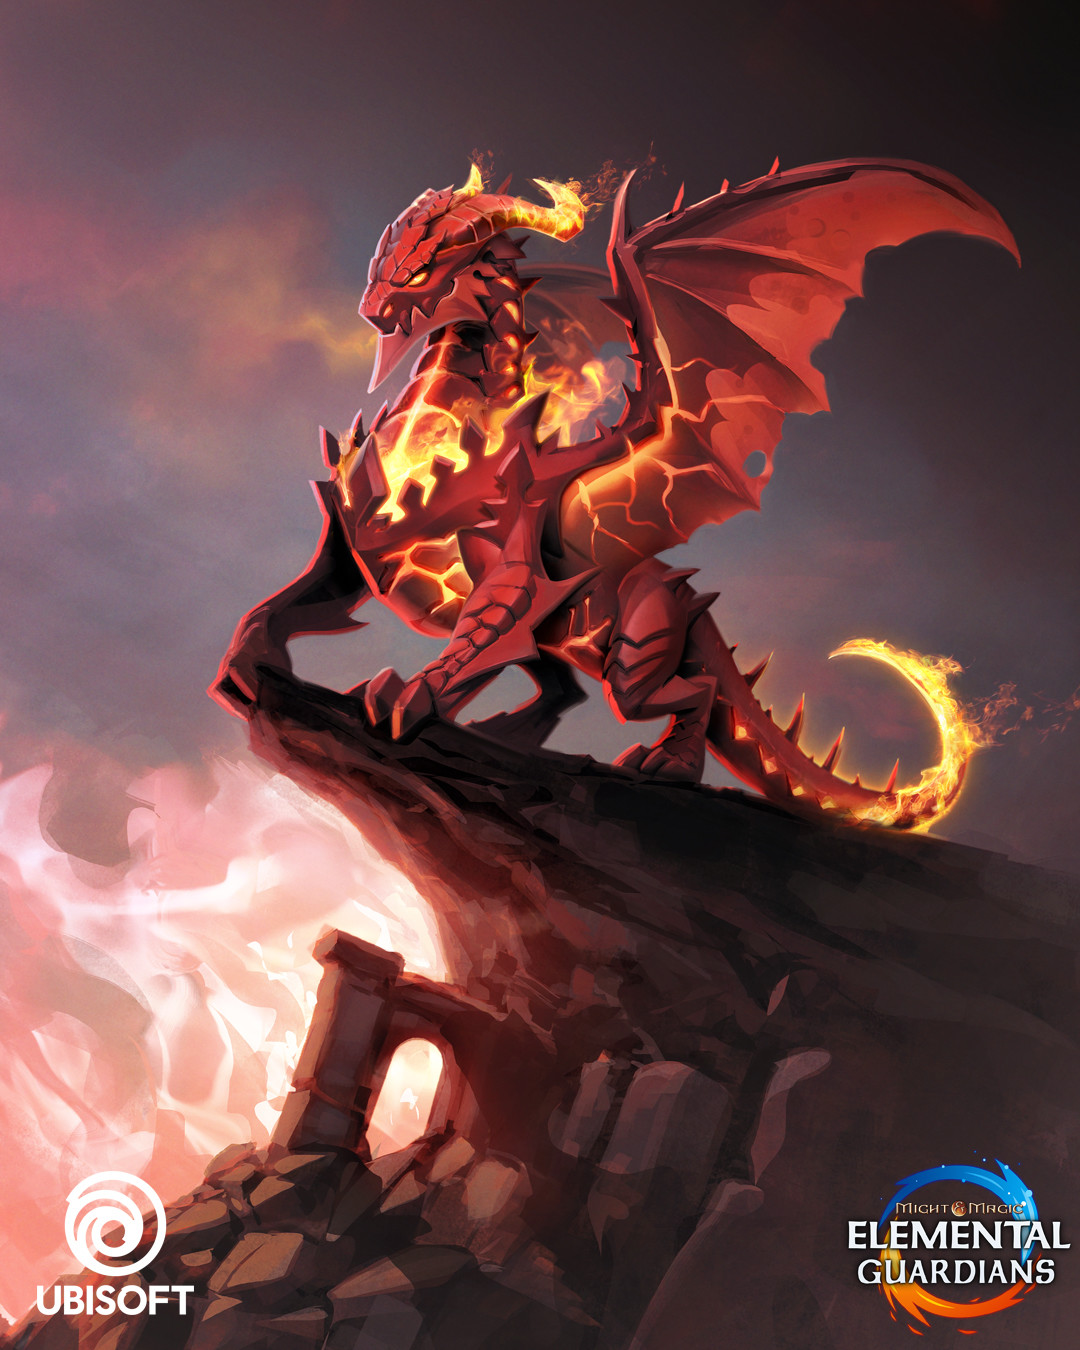 Lava Dragon - Champion Version
(videogame Might&amp;Magic Elemental Guardians)